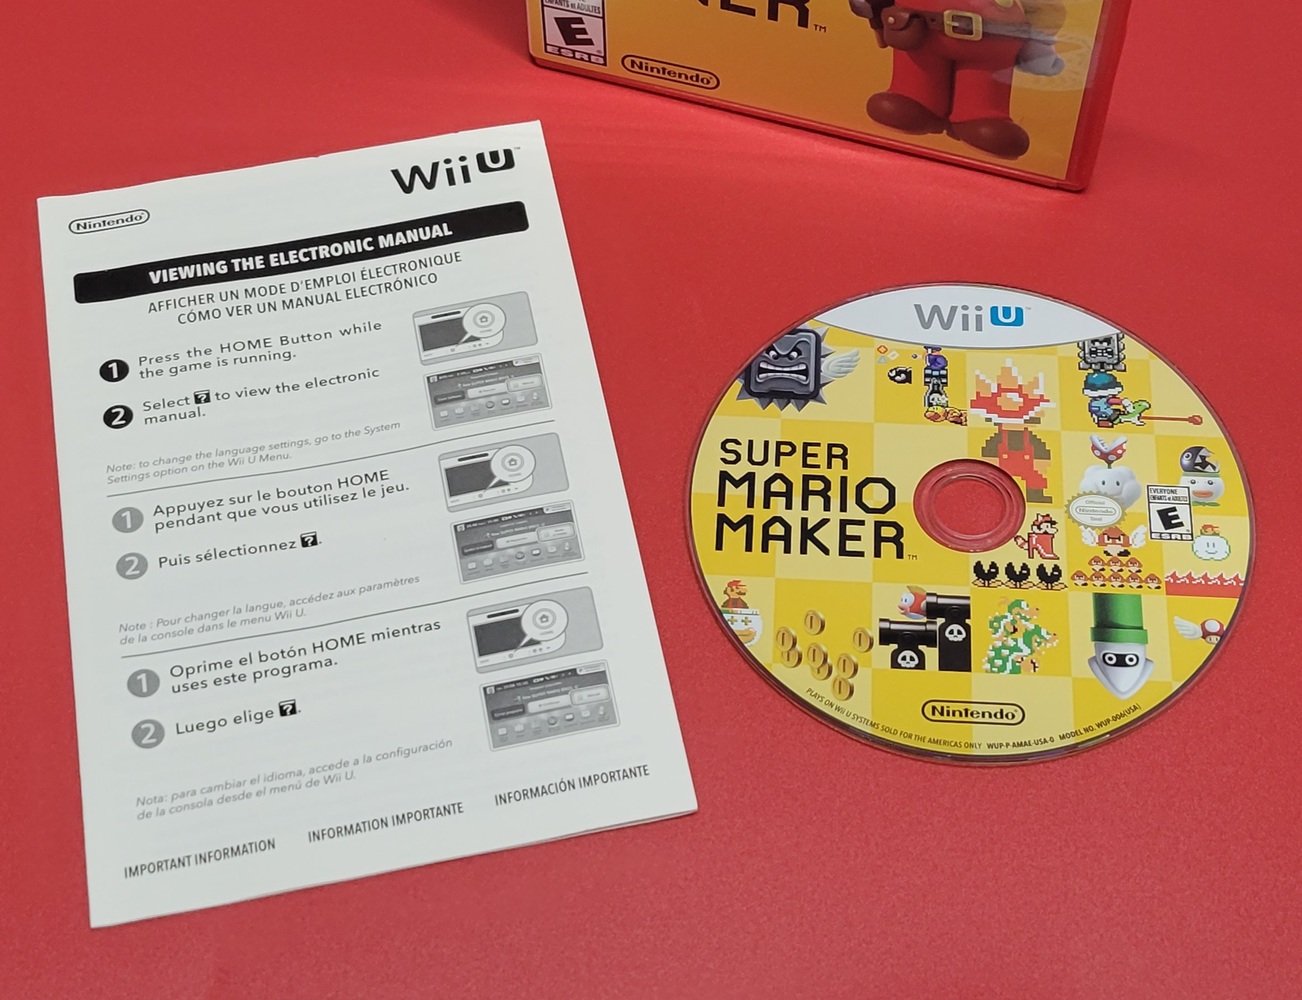 Nintendo Wii U Super Mario Maker Video Game - Complete